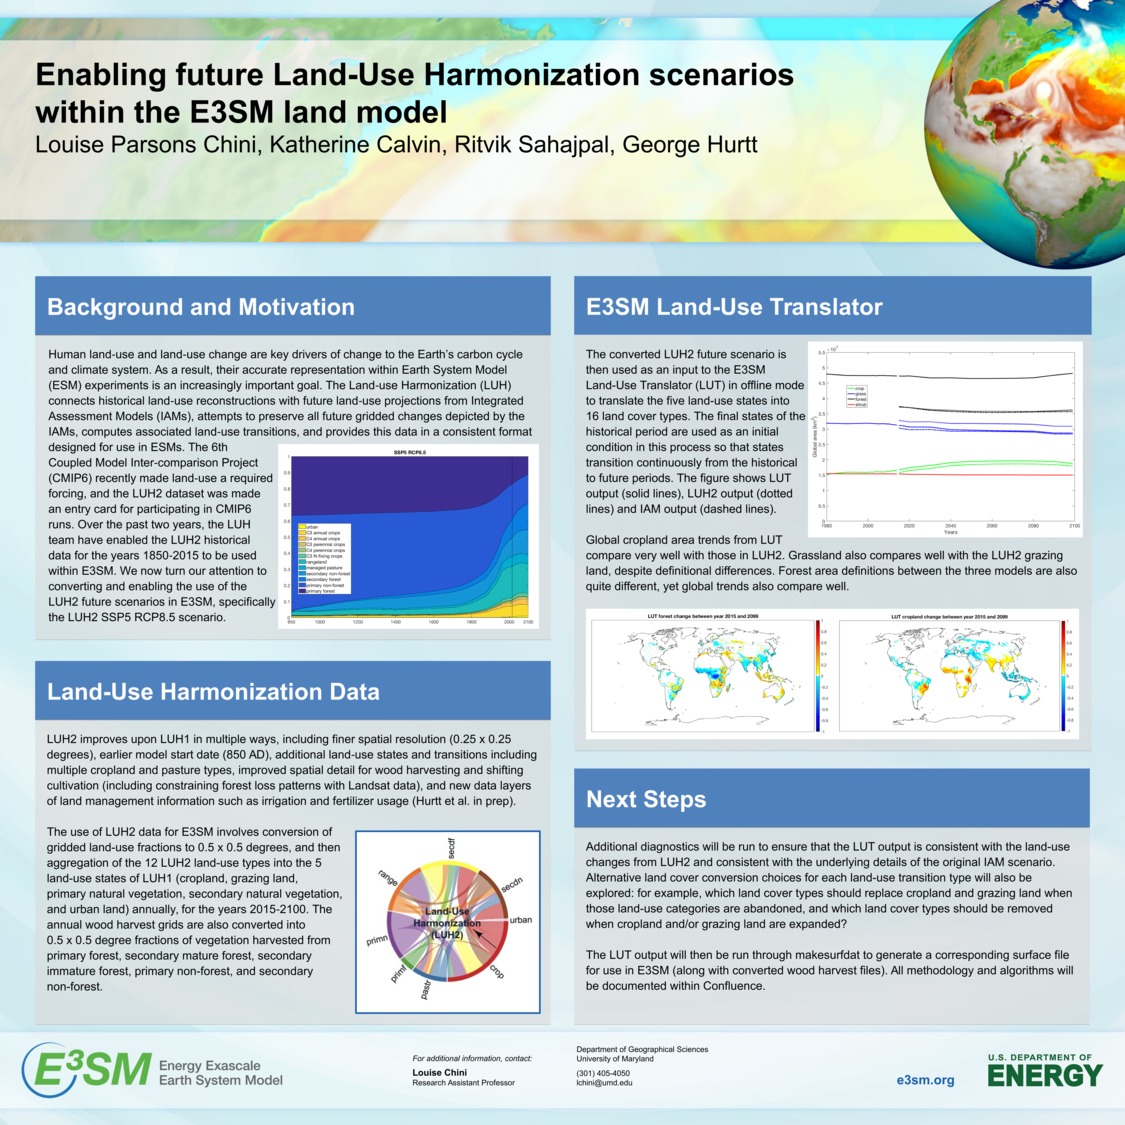 Enabling Future Land-Use Harmonization Scenarios Within The E3sm Land Model by lchini